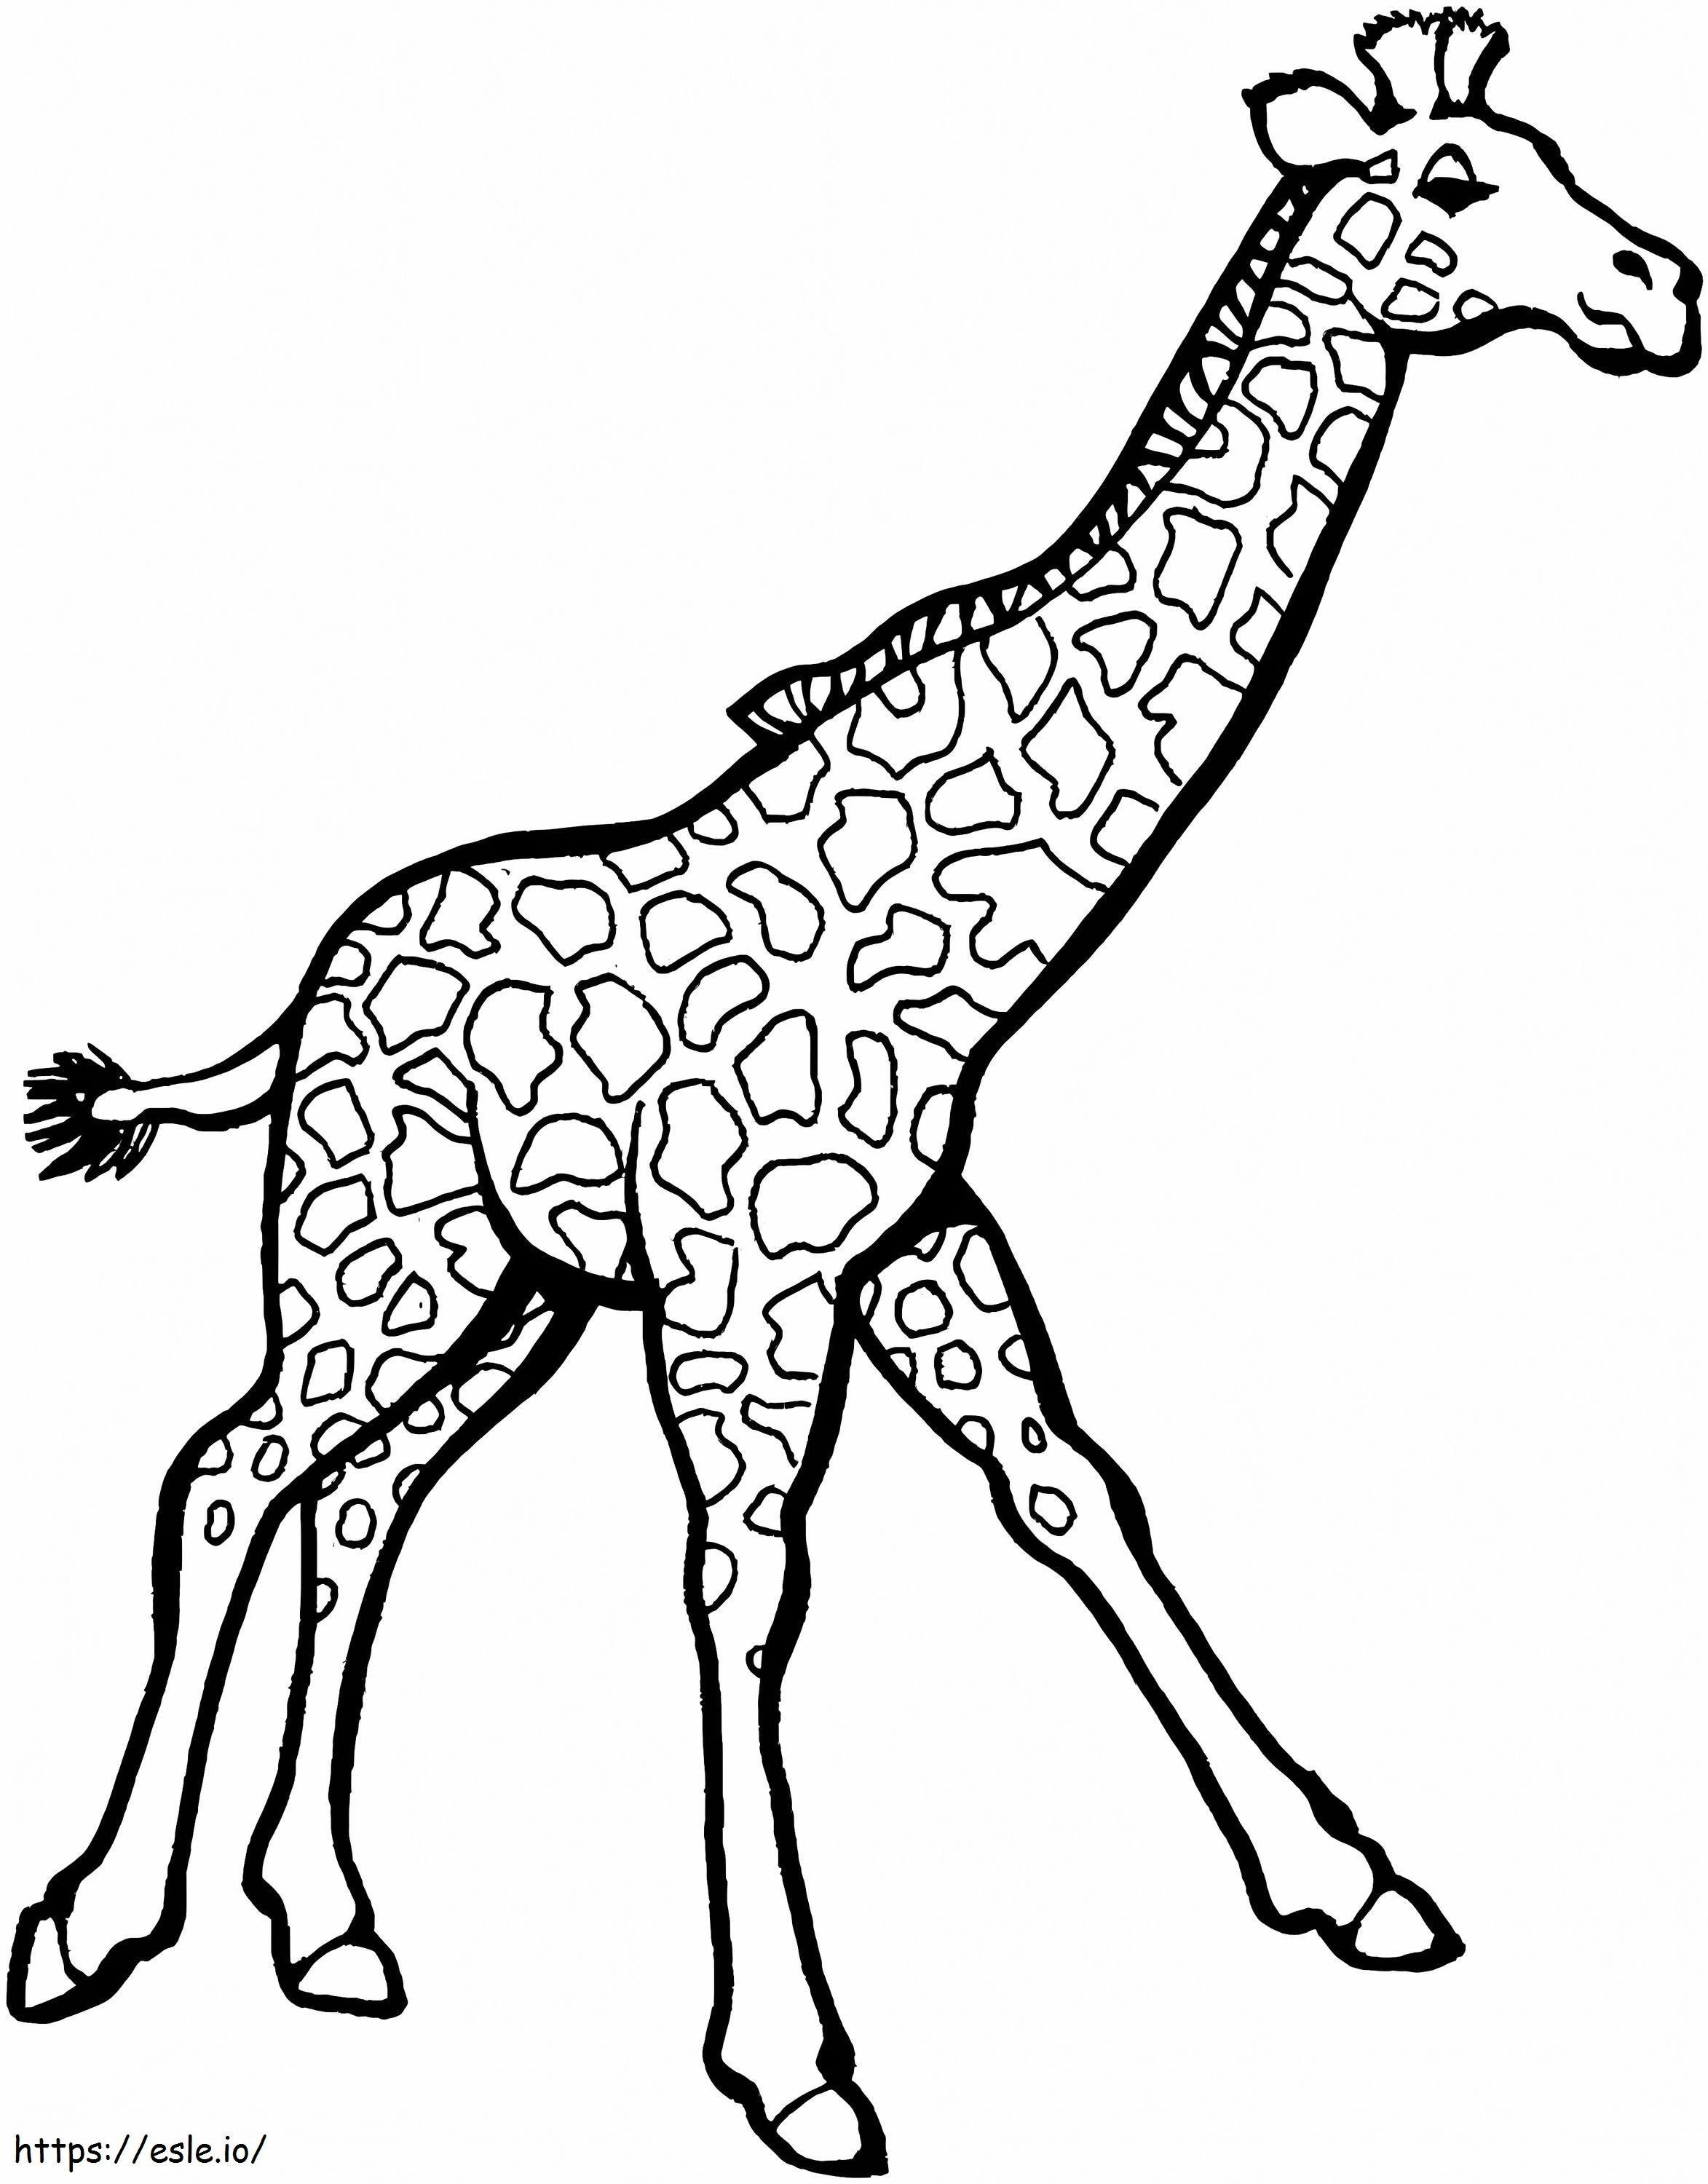 Normalna żyrafa kolorowanka